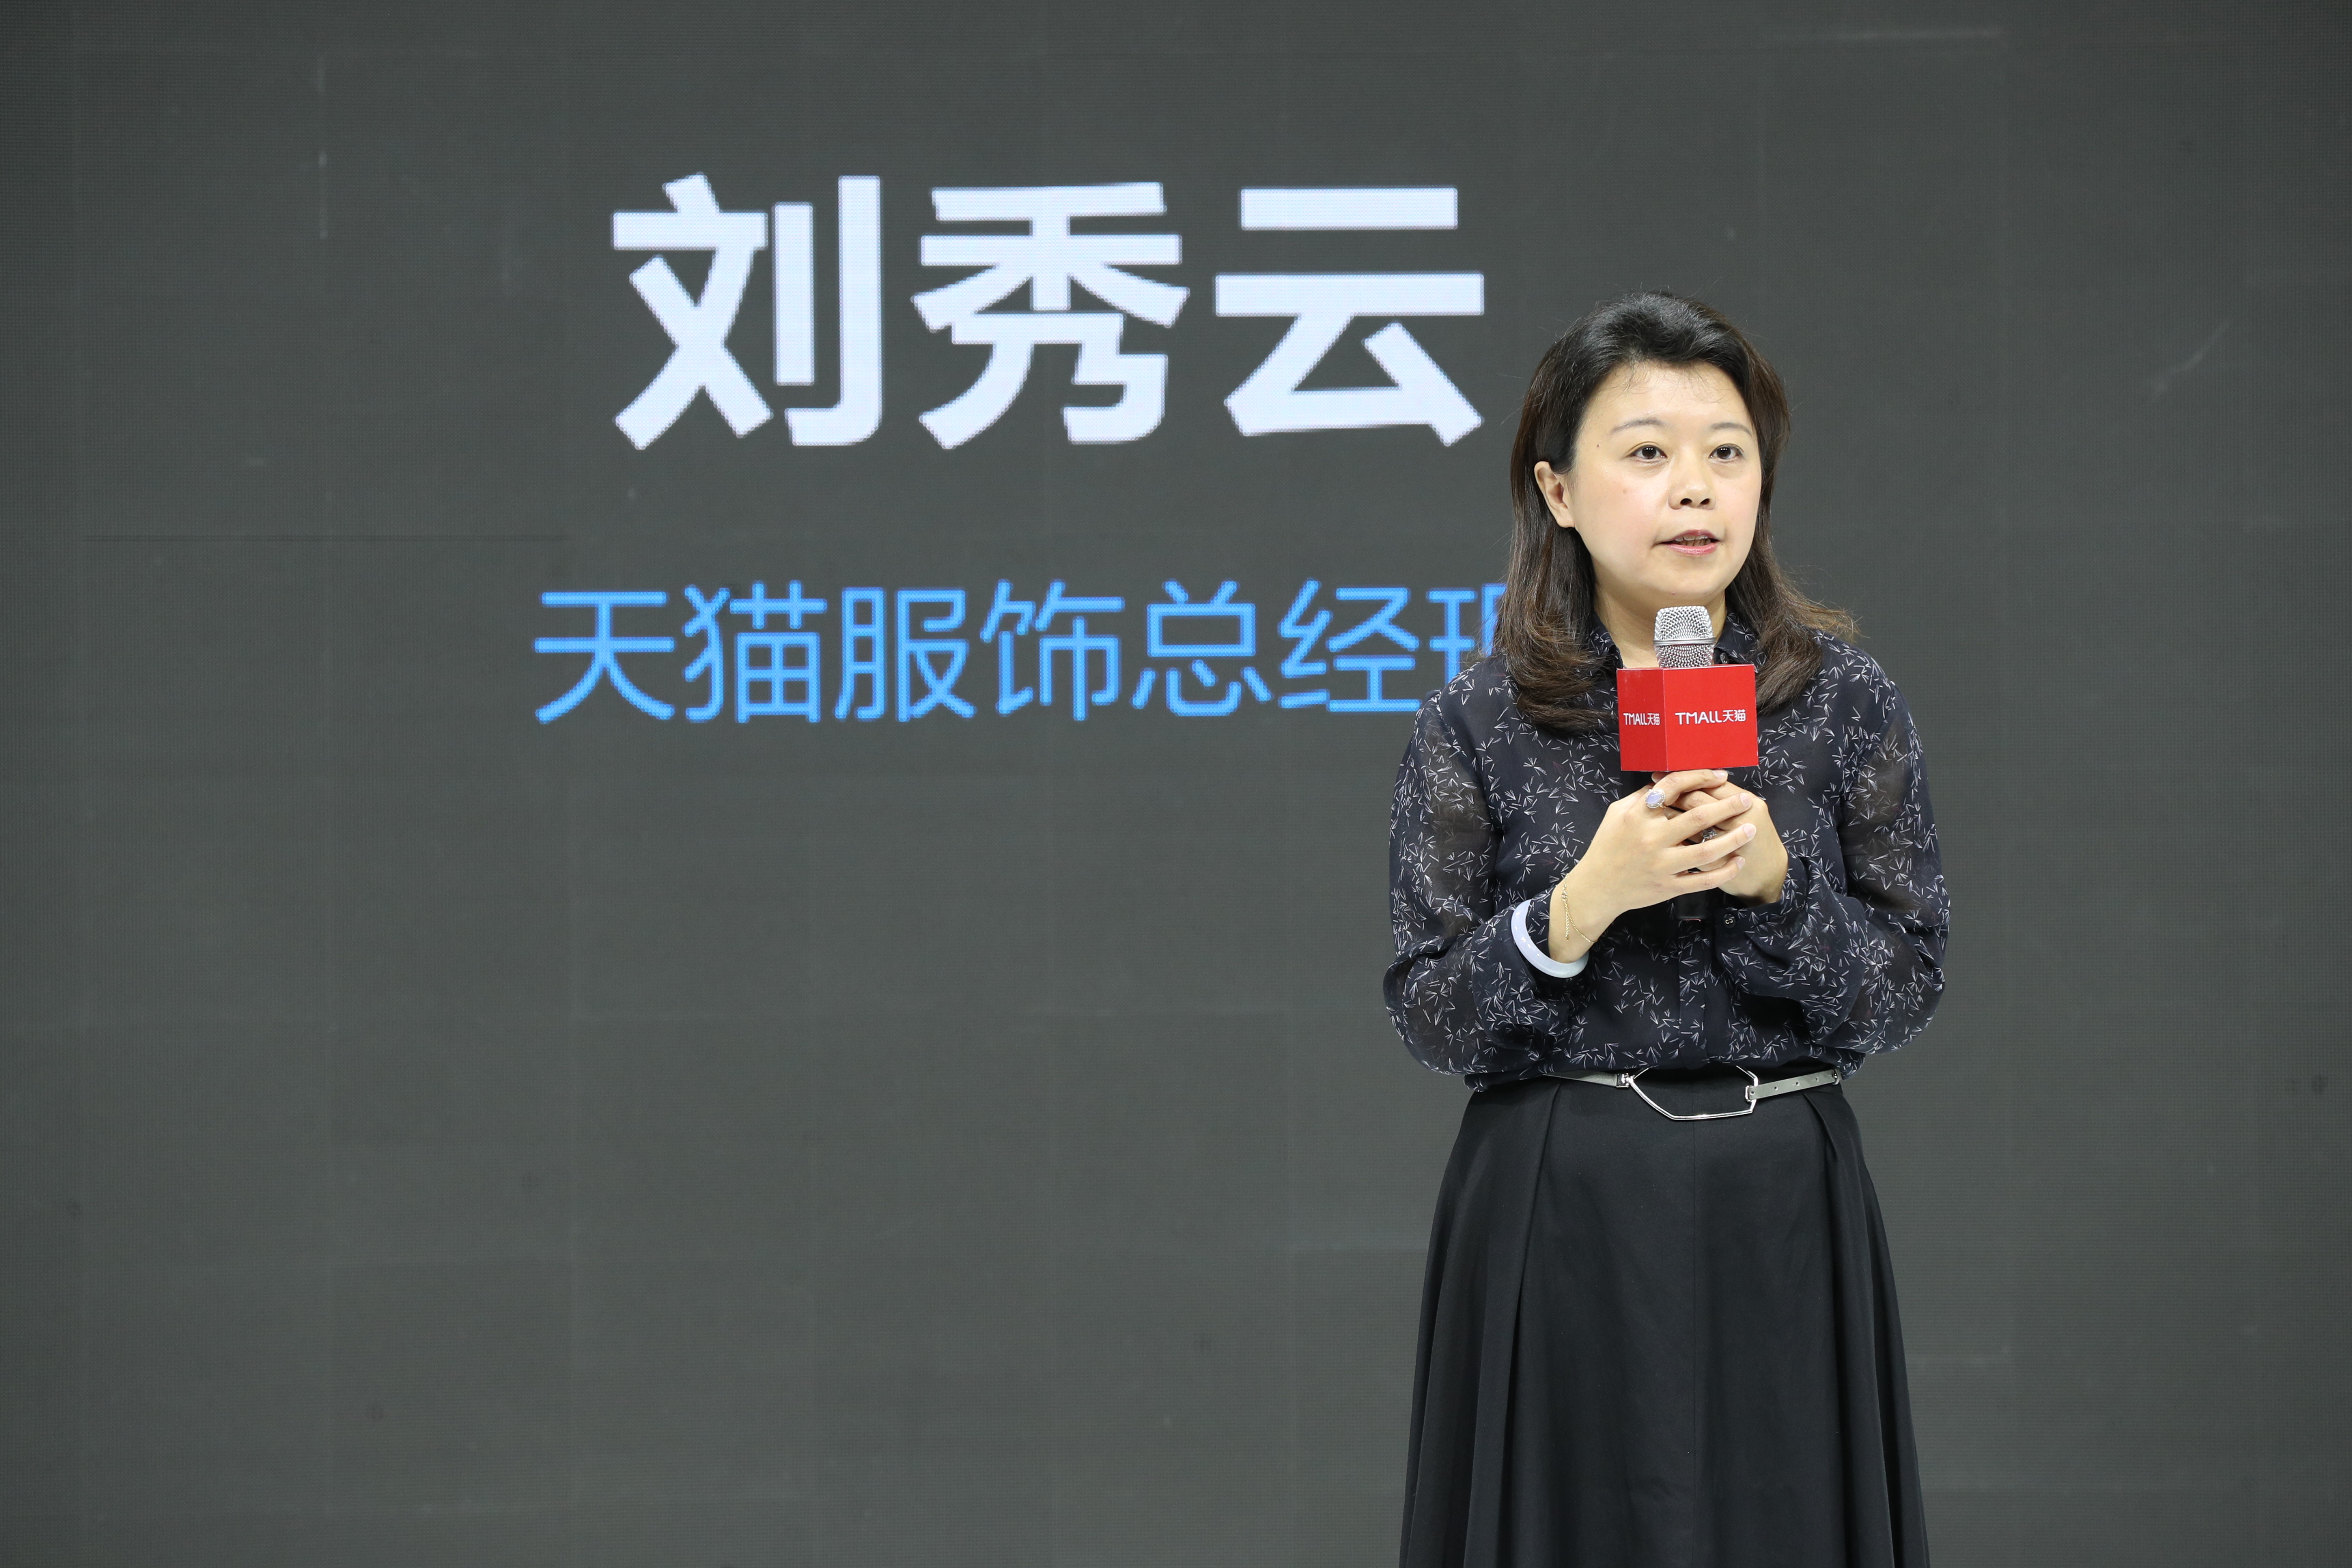 Jessica Liu speaking at Shanghai Fashion Week 